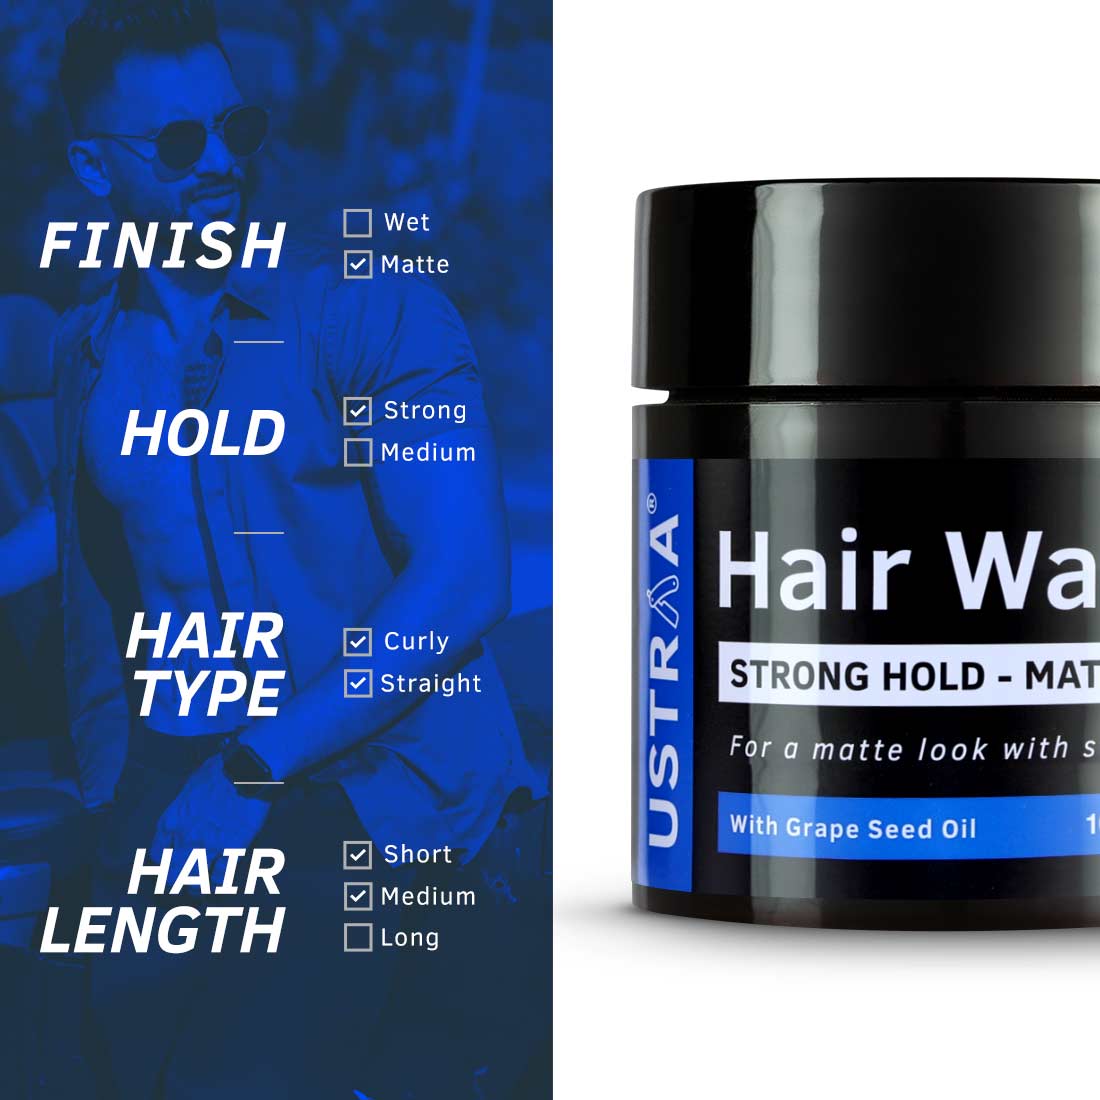 Hair Wax - Strong Hold, Matte Look - 100g